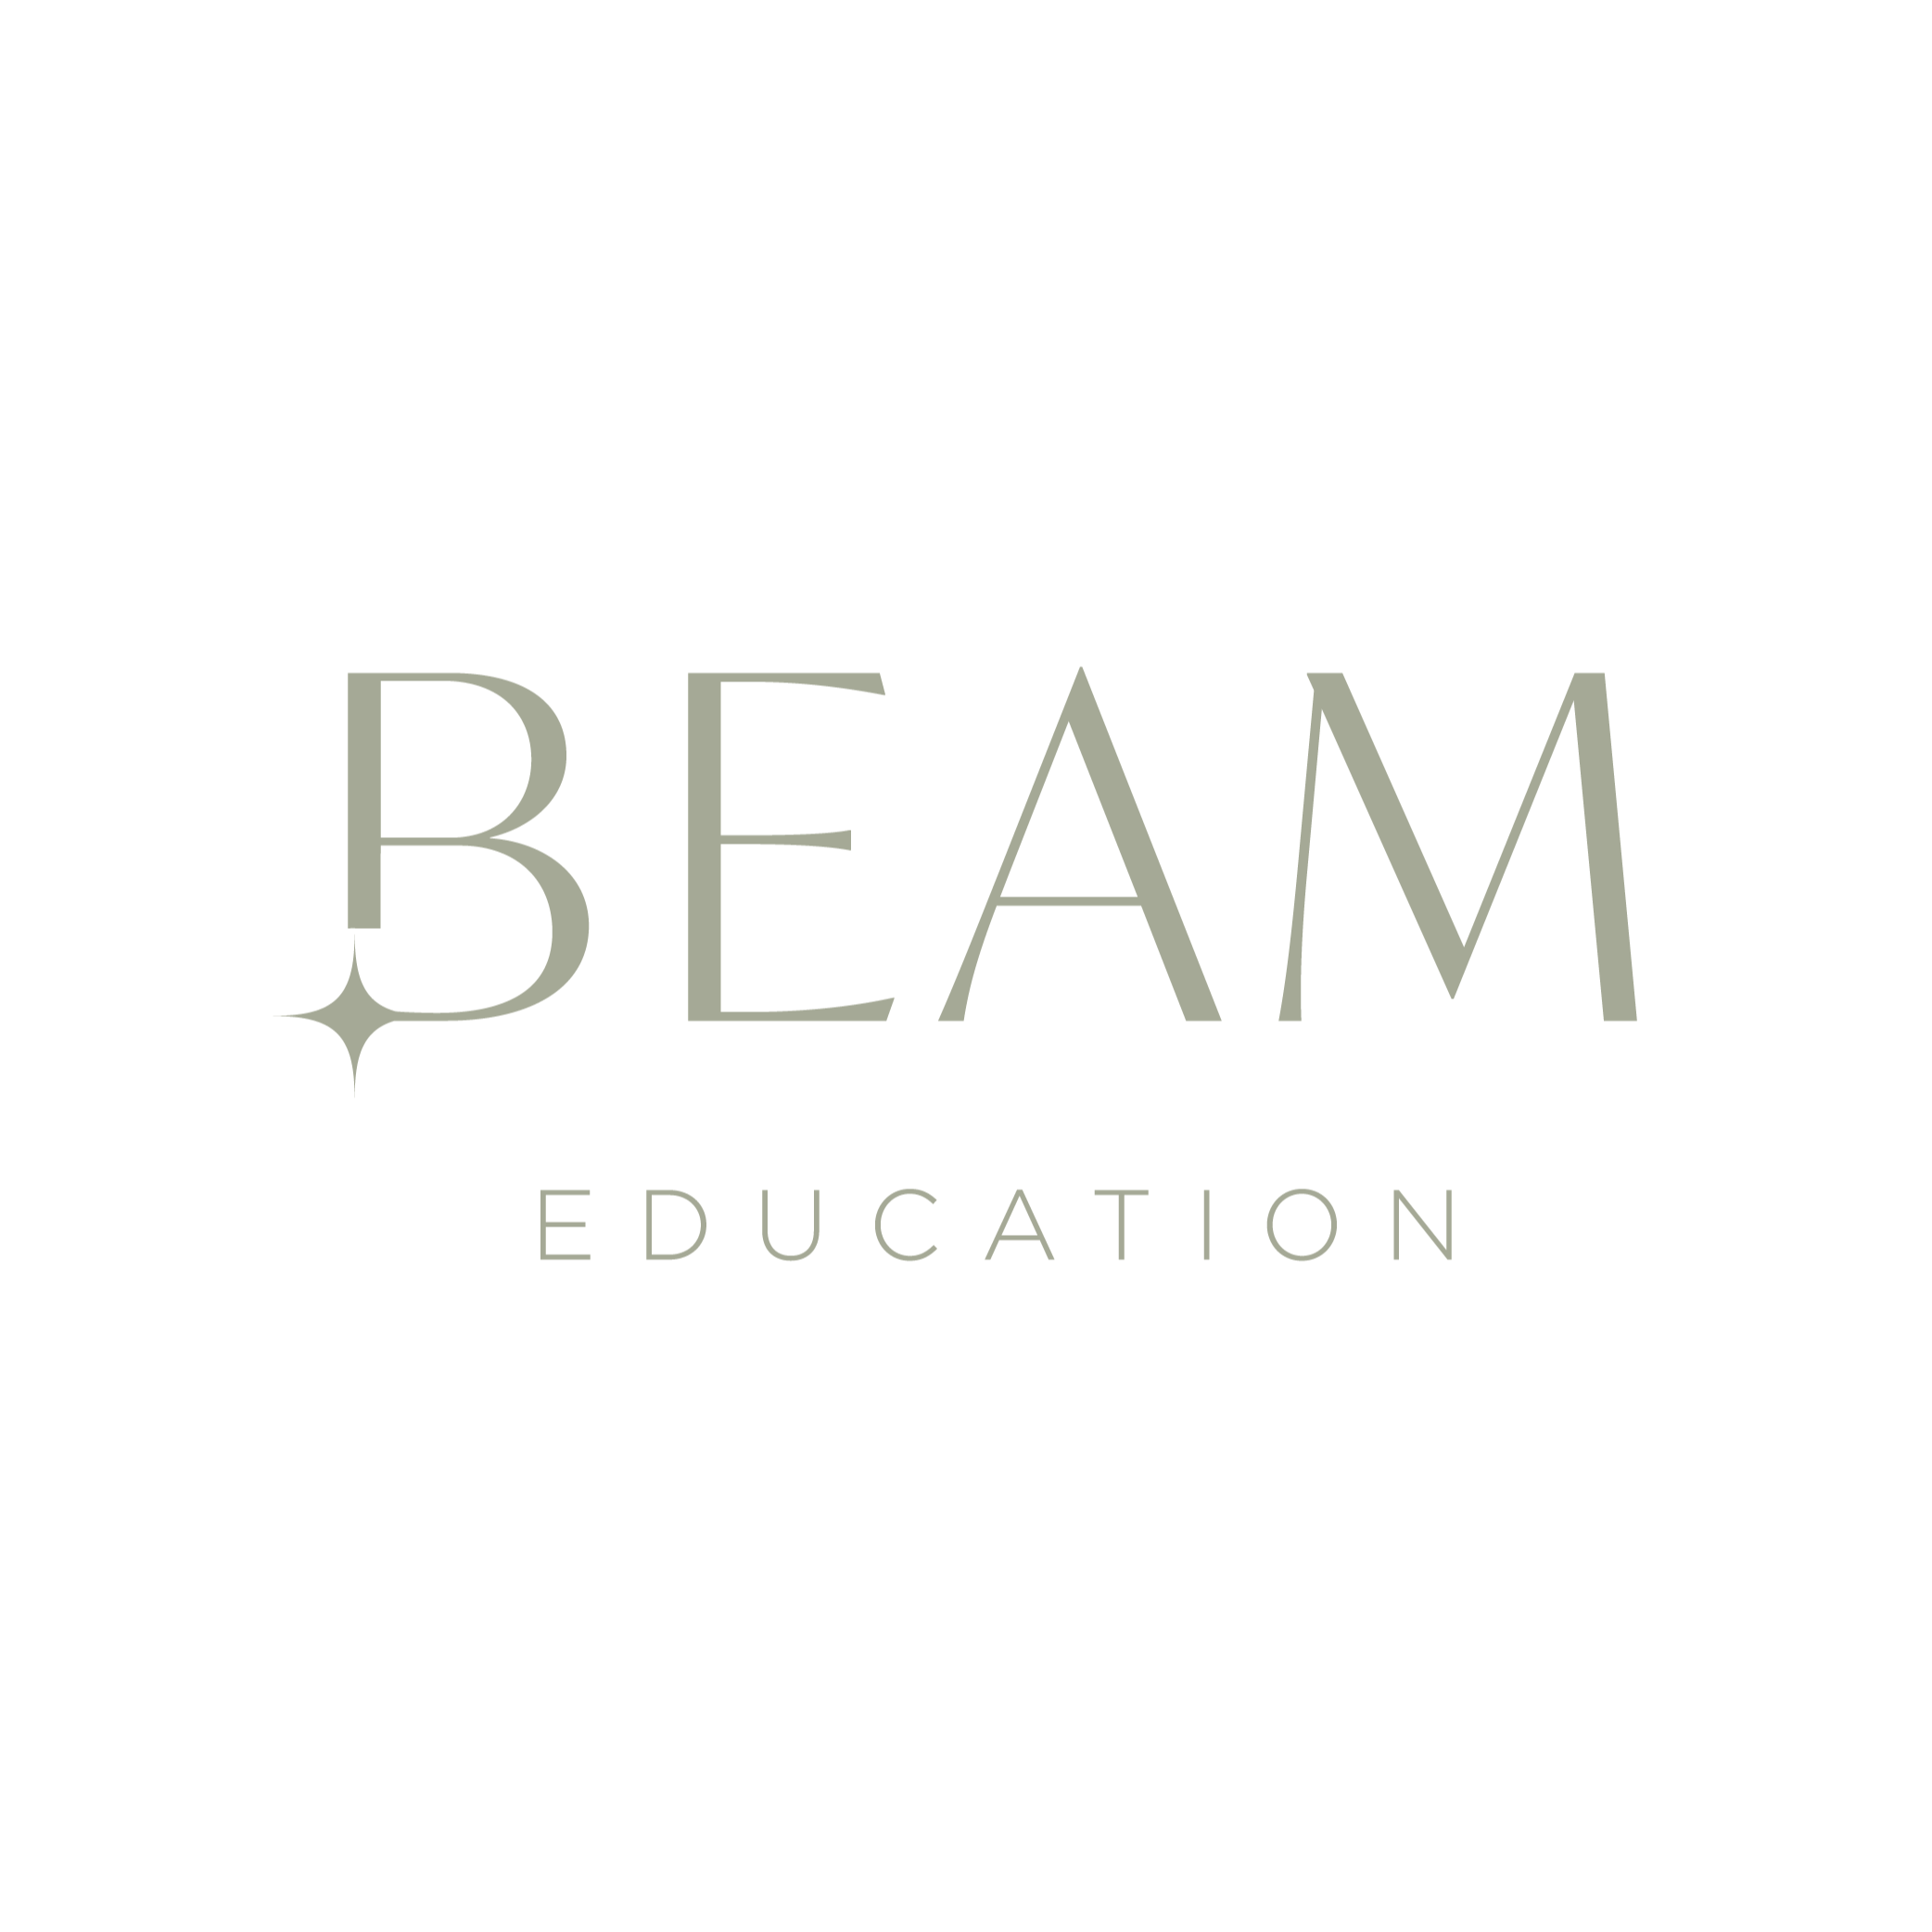 Beam Education - Nashville, TN 37219 - (615)256-1600 | ShowMeLocal.com